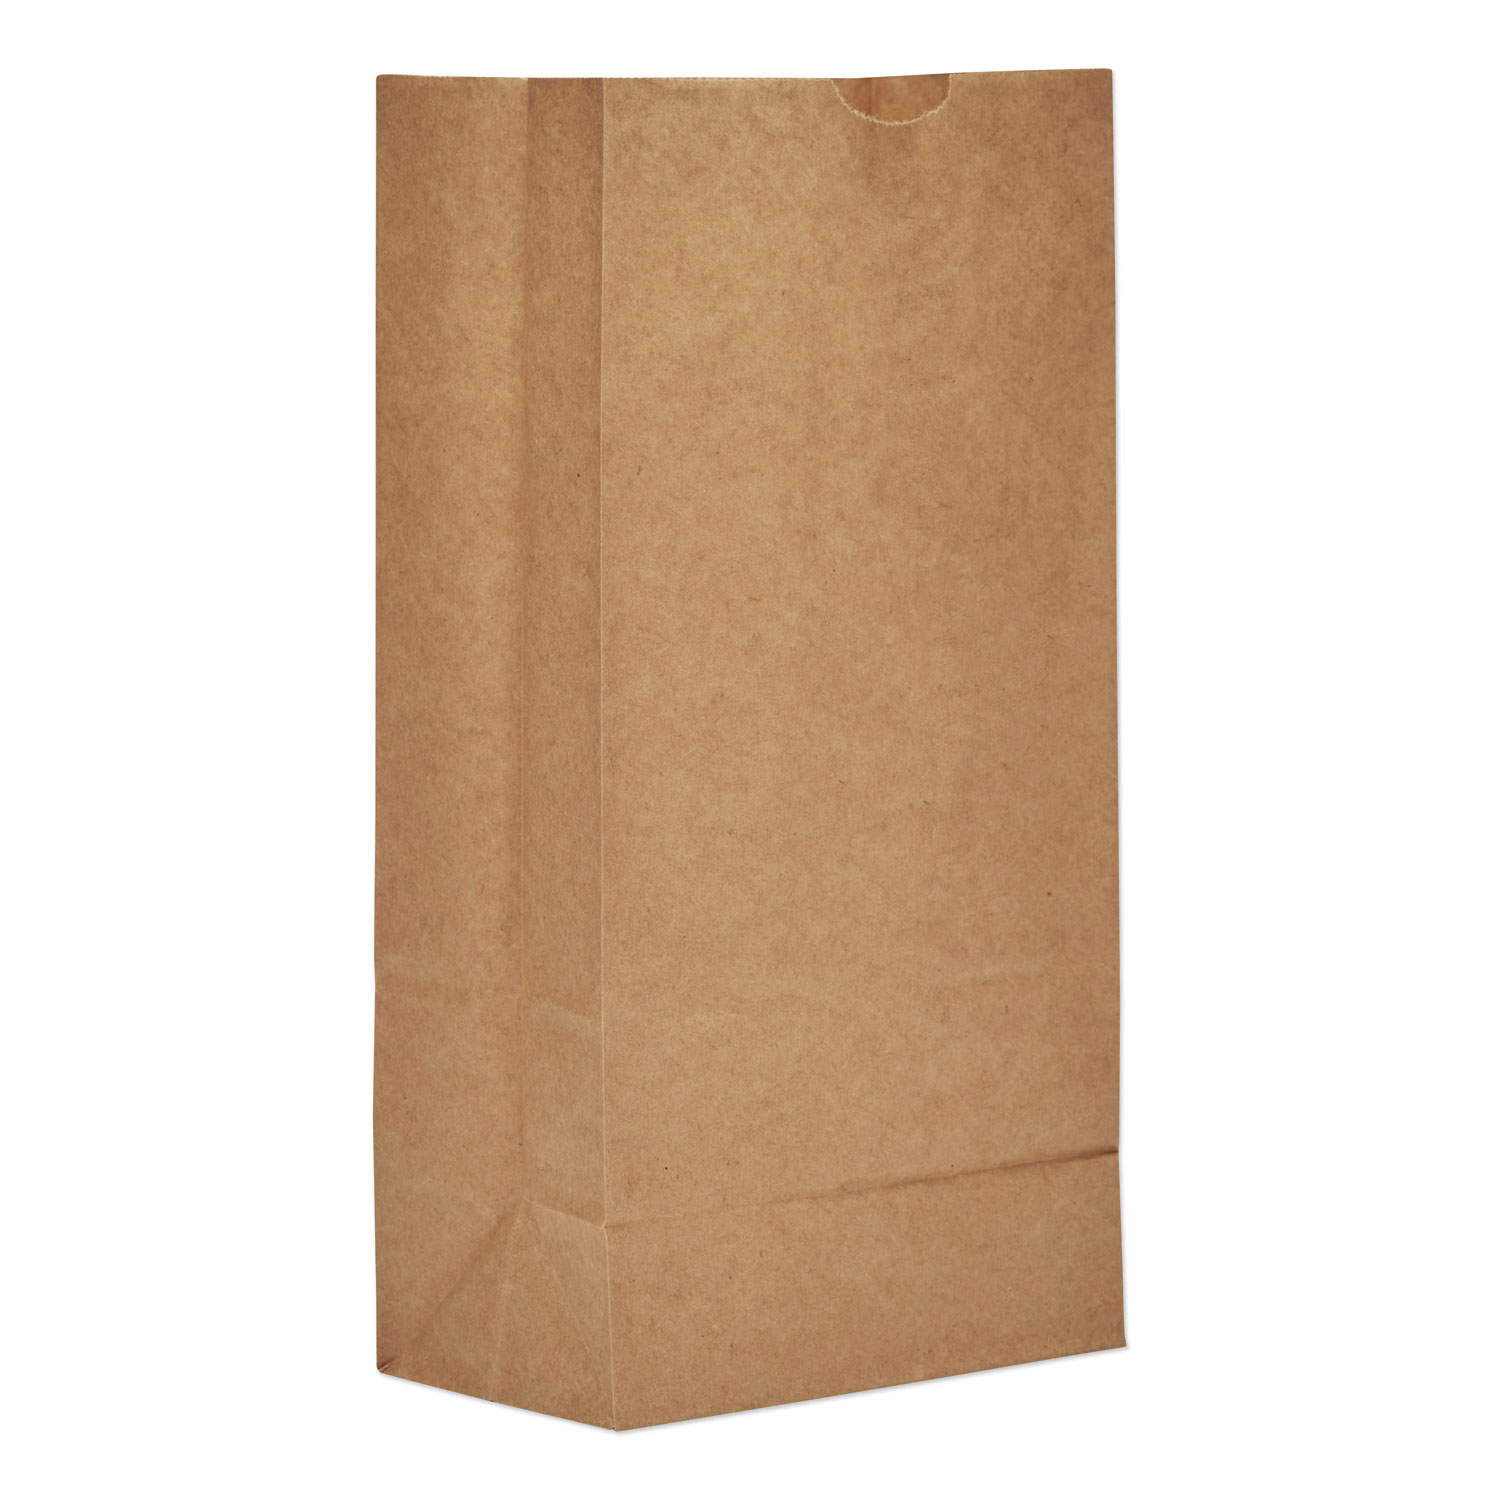  General 30908 Grocery Paper Bags, 57 lbs Capacity, #8, 6.13w x 4.17d x 12.44h, Kraft, 500 Bags (BAGGX8500) 